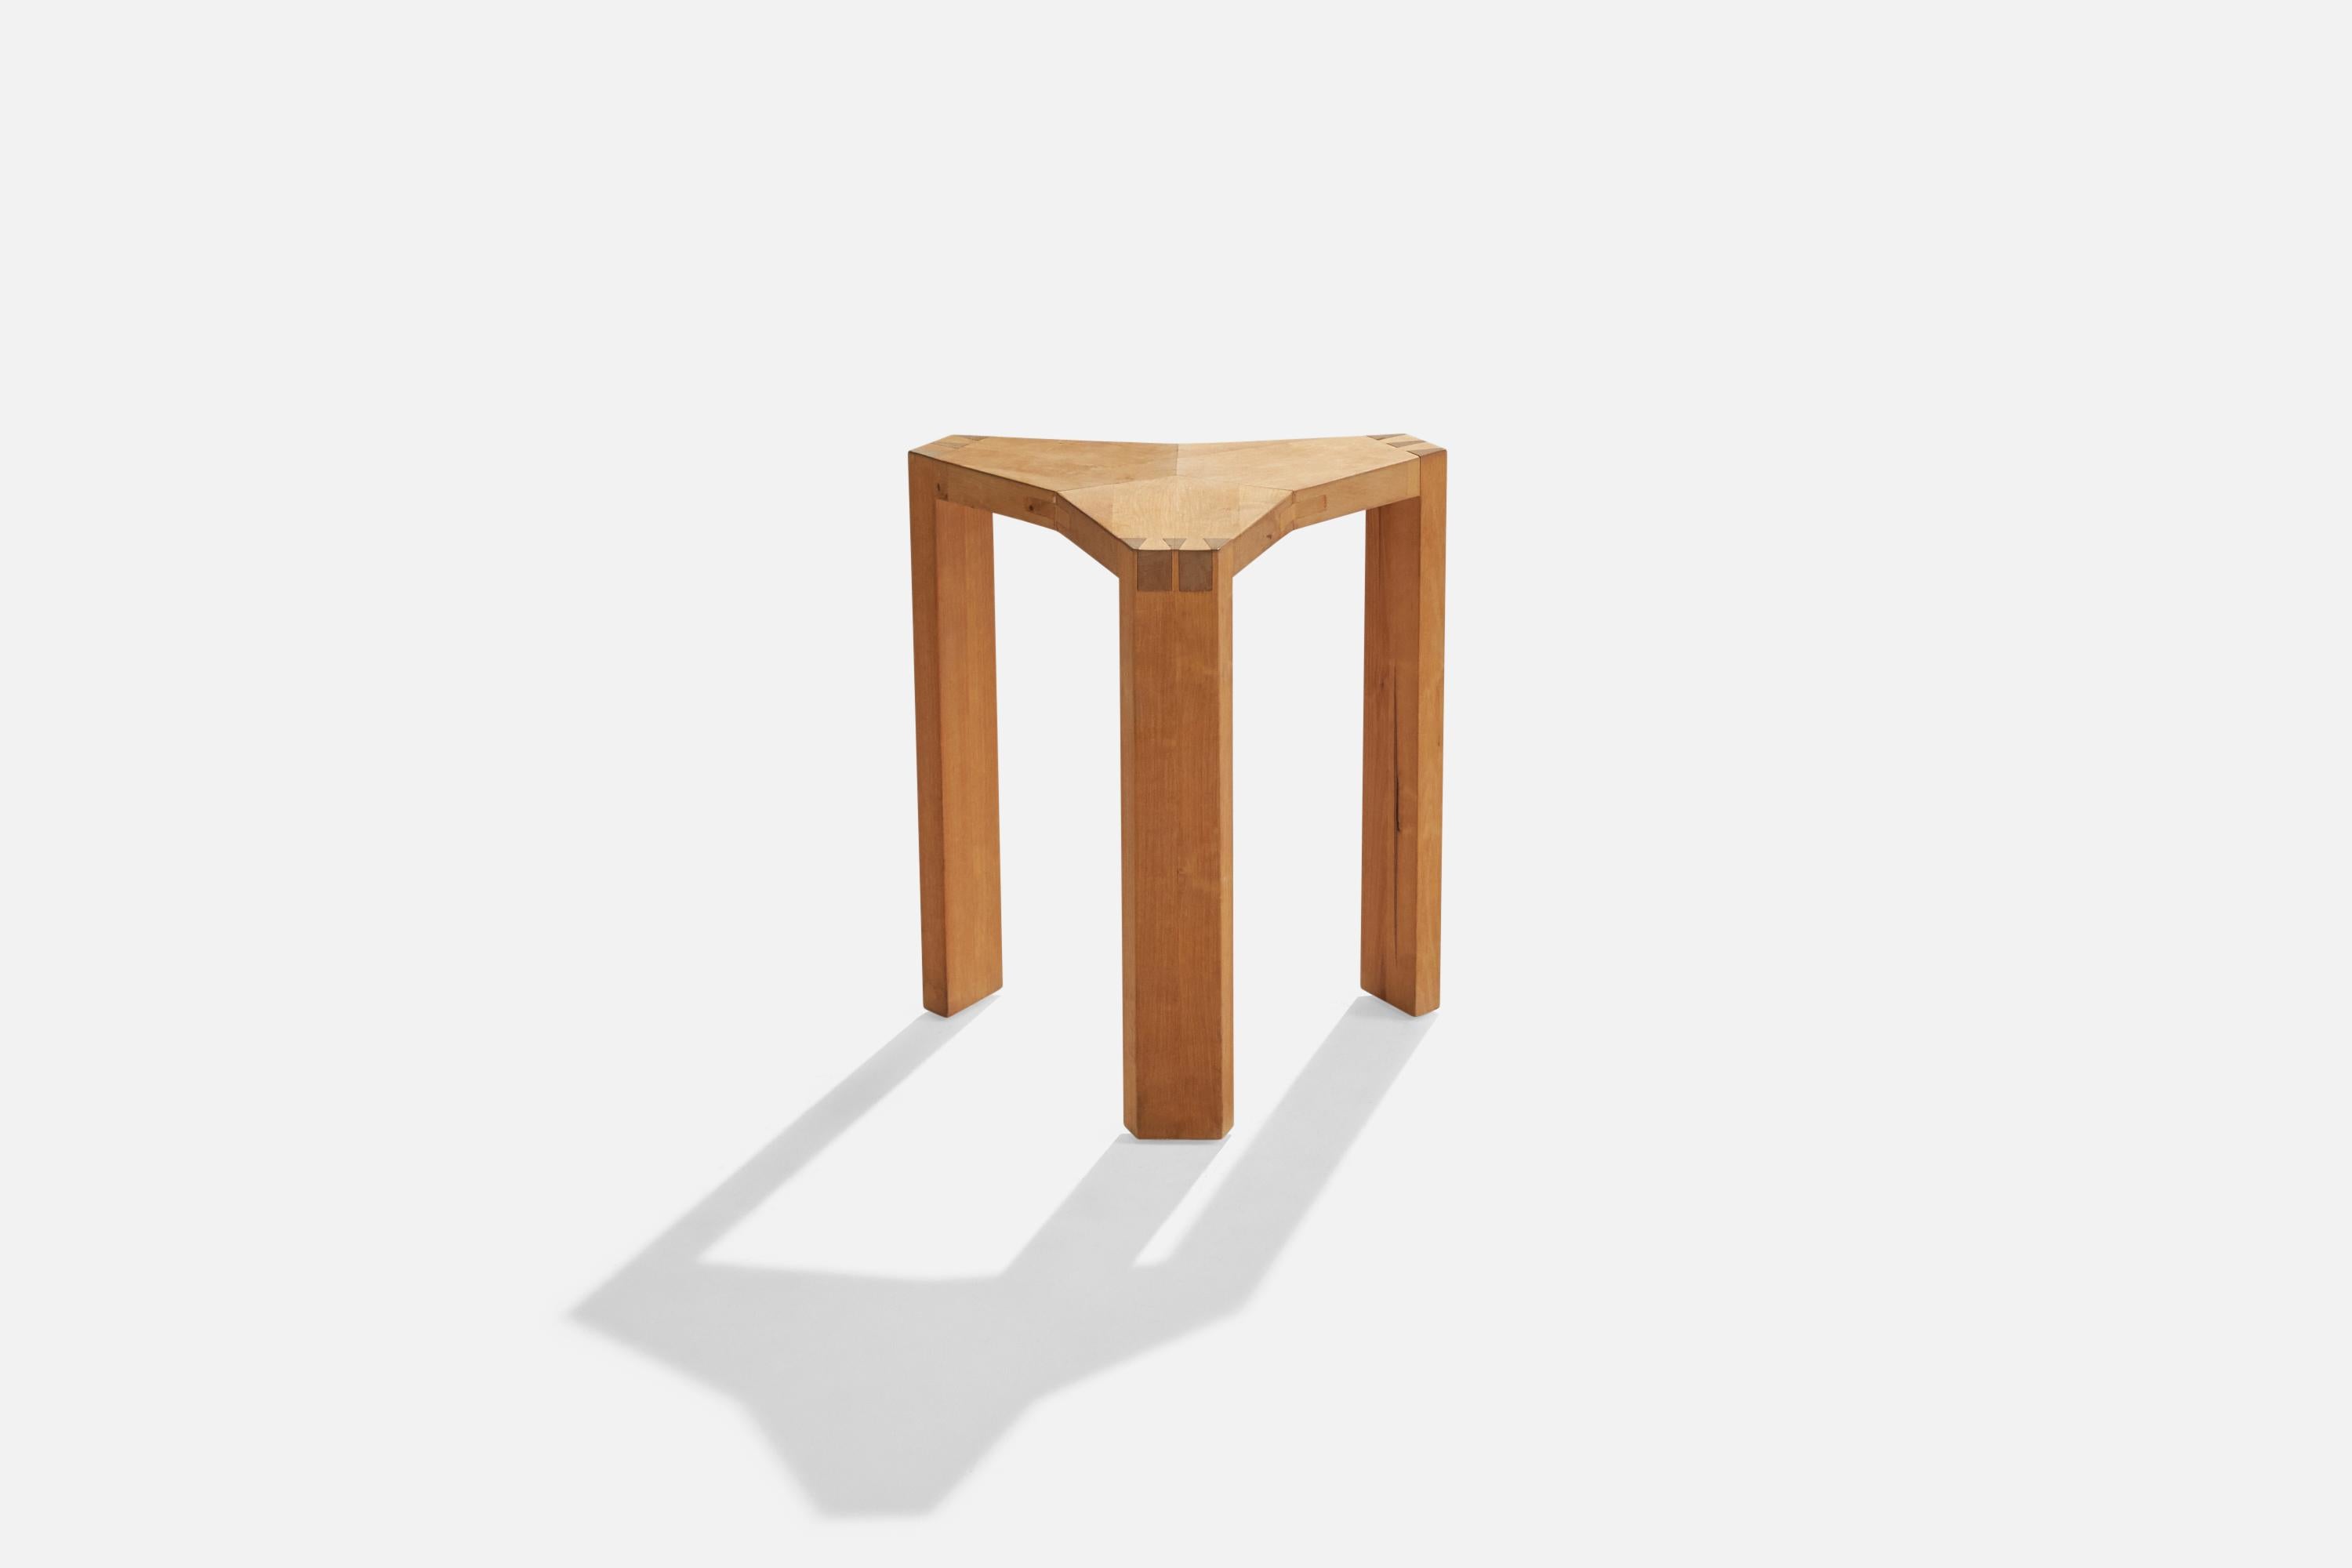 A birch stool designed and produced Kurt-Eric Blücker, Munkedal, Sweden, 1970s.

Seat height 16.75”.